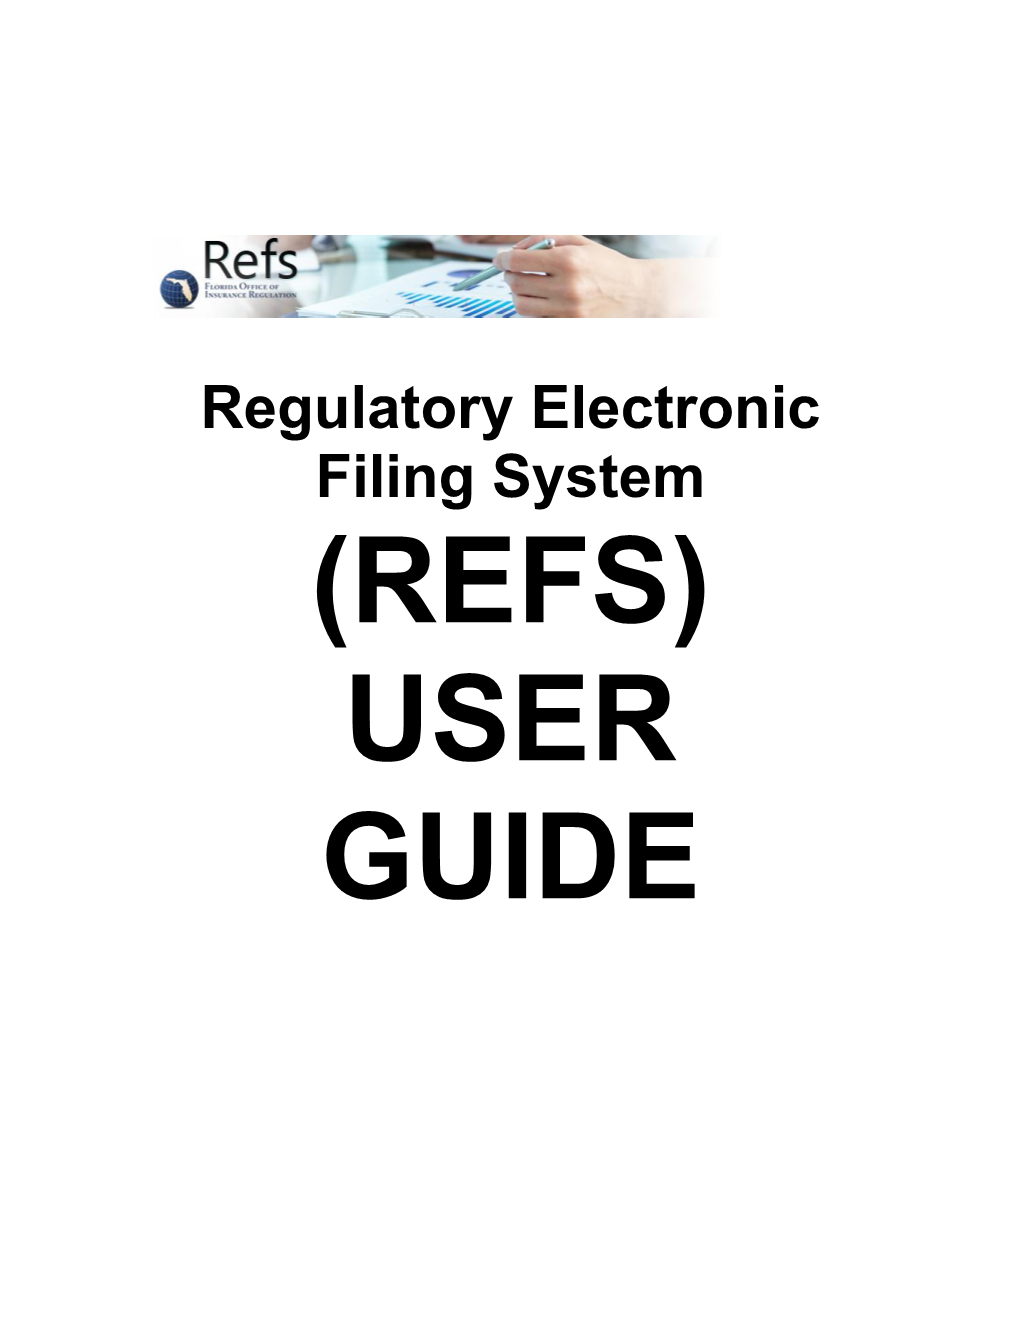 Regulatory Electronic Filing System (REFS) USER GUIDE